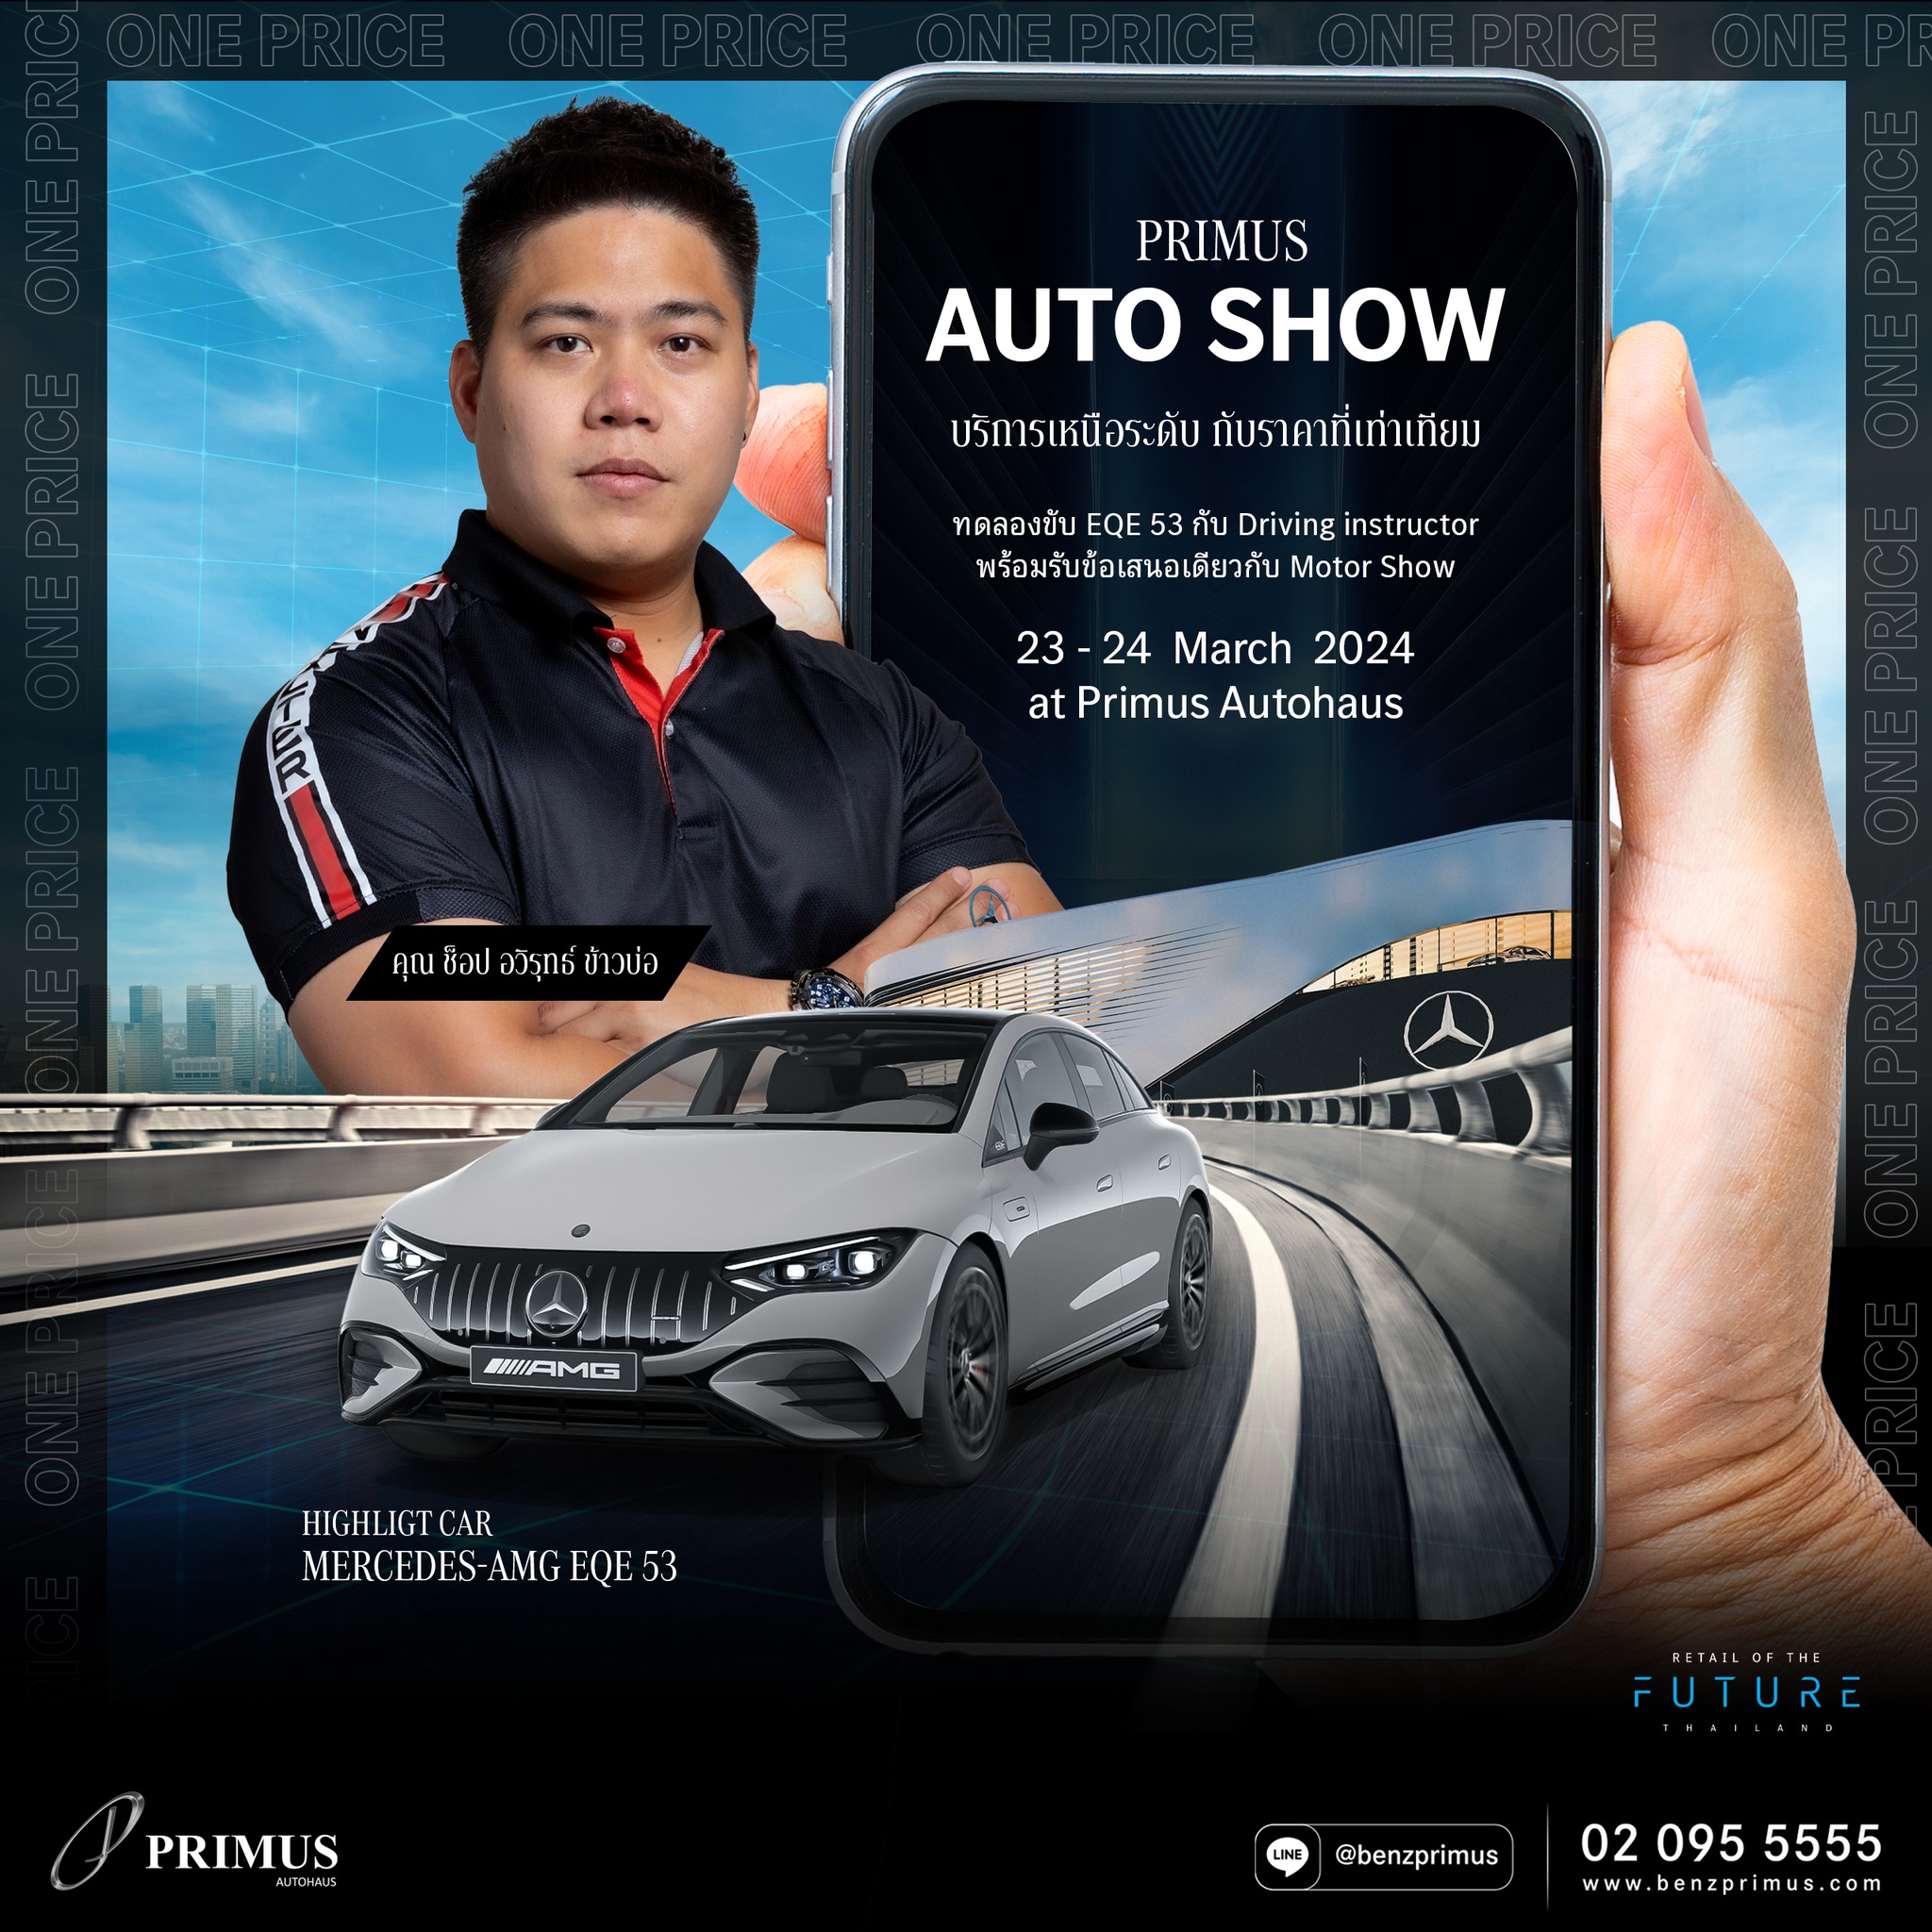 Primus Auto Show 2024